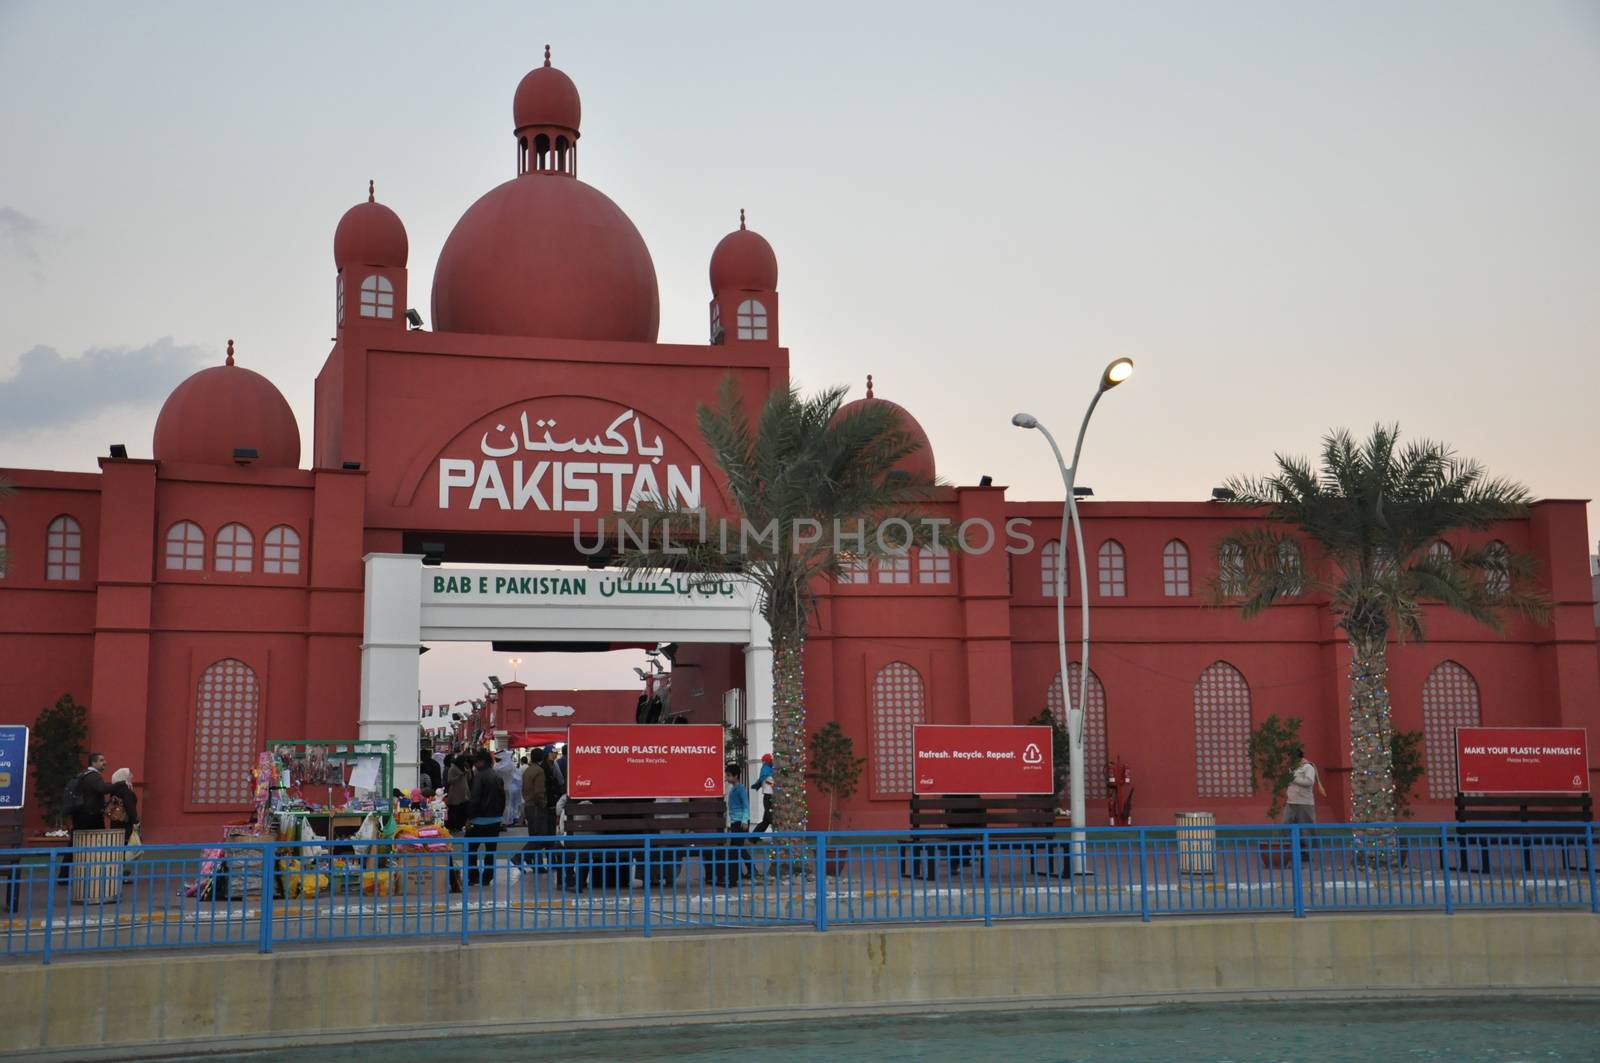 Pakistan pavilion at Global Village in Dubai, UAE by sainaniritu